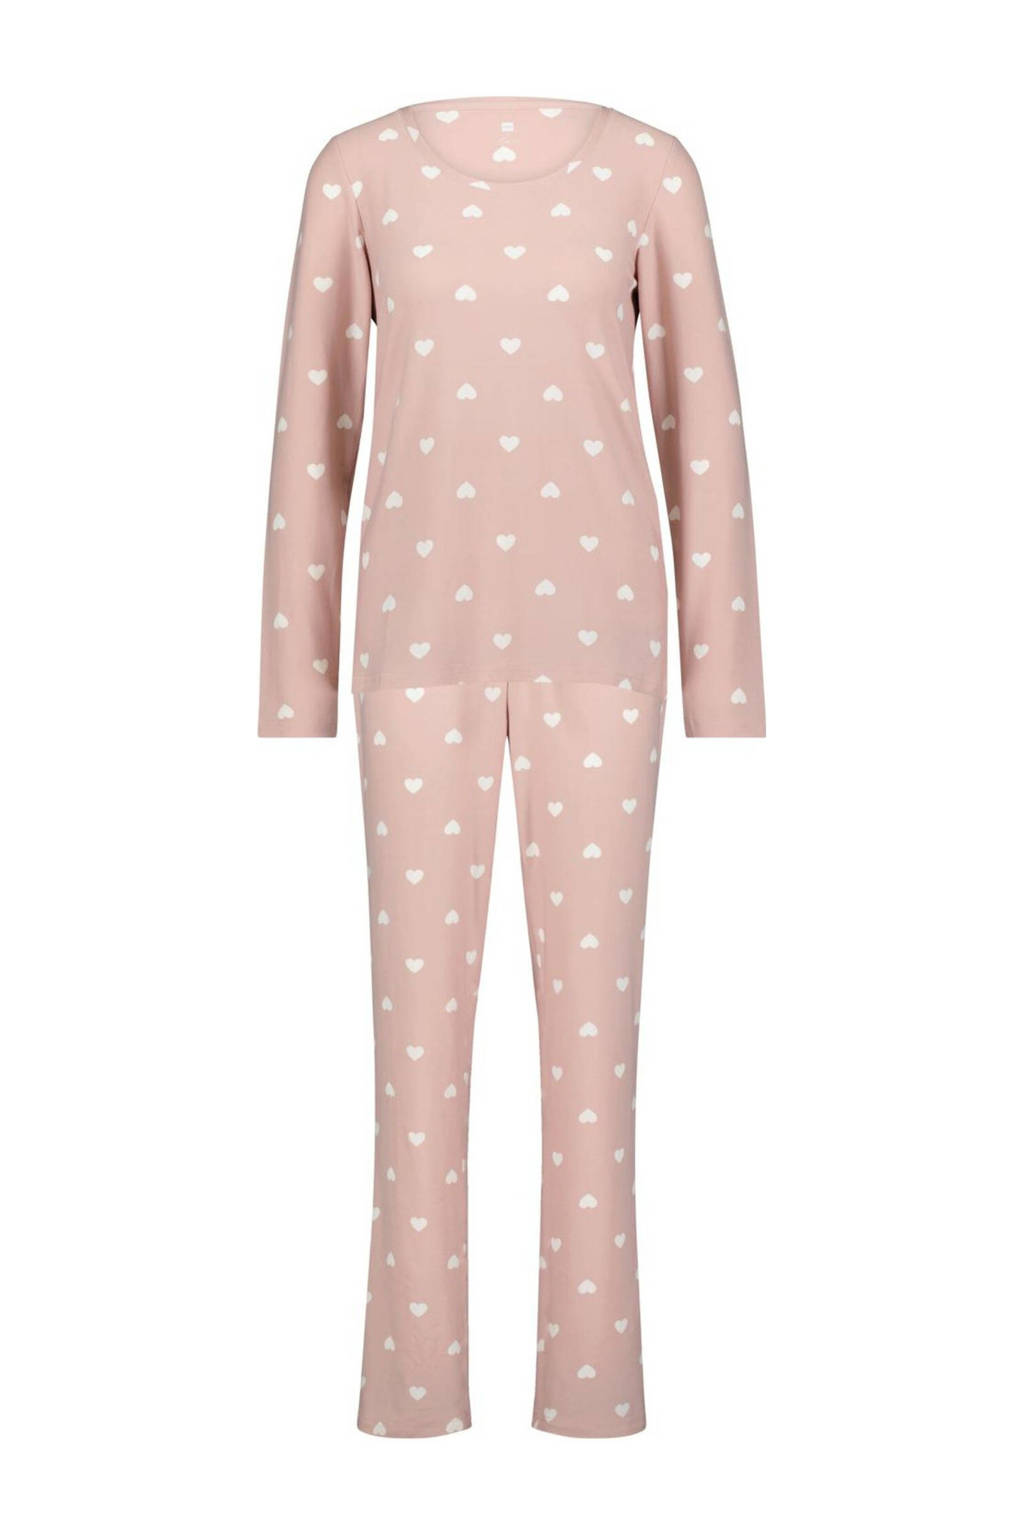 HEMA pyjama met hartjes roze/wit, Roze/wit